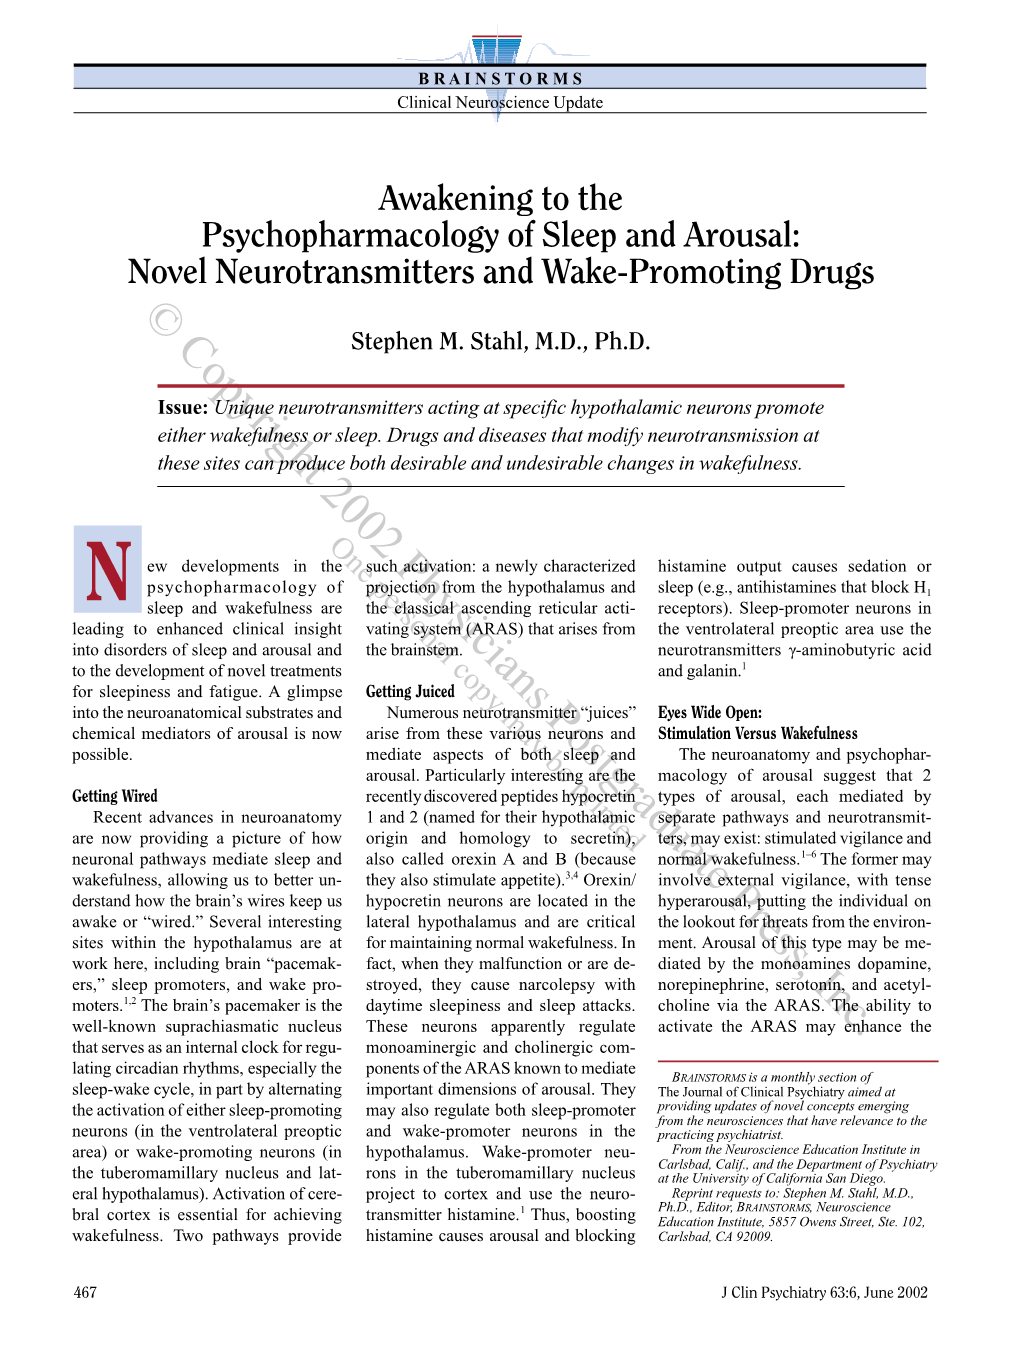 Awakening to the Psychopharmacology of Sleep and Arousal: Novel Neurotransmitters and Wake-Promoting Drugs © Copyright 2002 Physicians Postgraduate Press, Inc